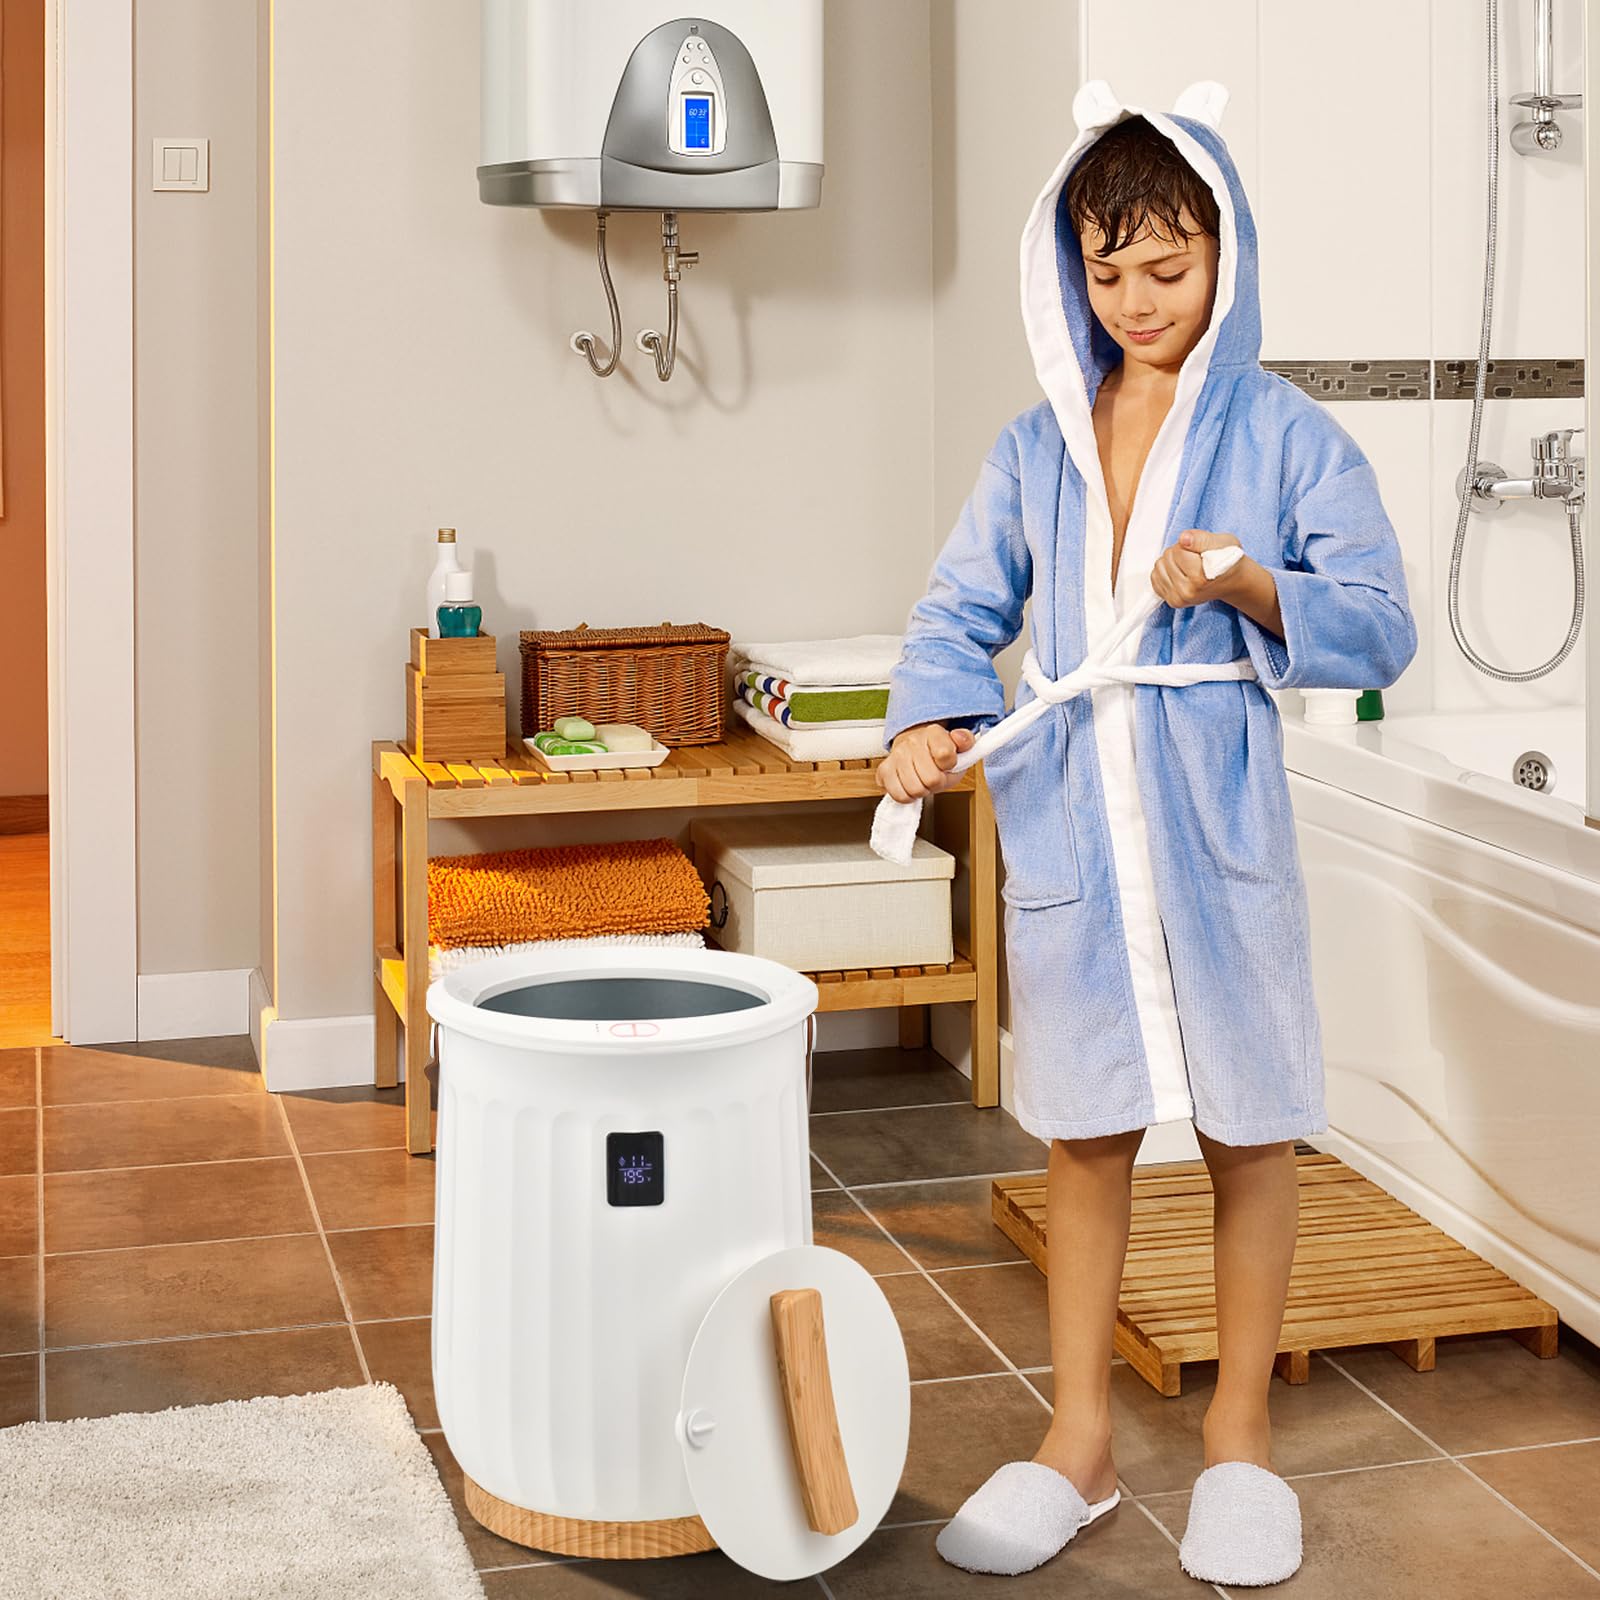 Giantex Towel Warmer Bucket, 15-60 Min Timer, Auto Shut Off, LCD Screen, Child Safety Lock (White)